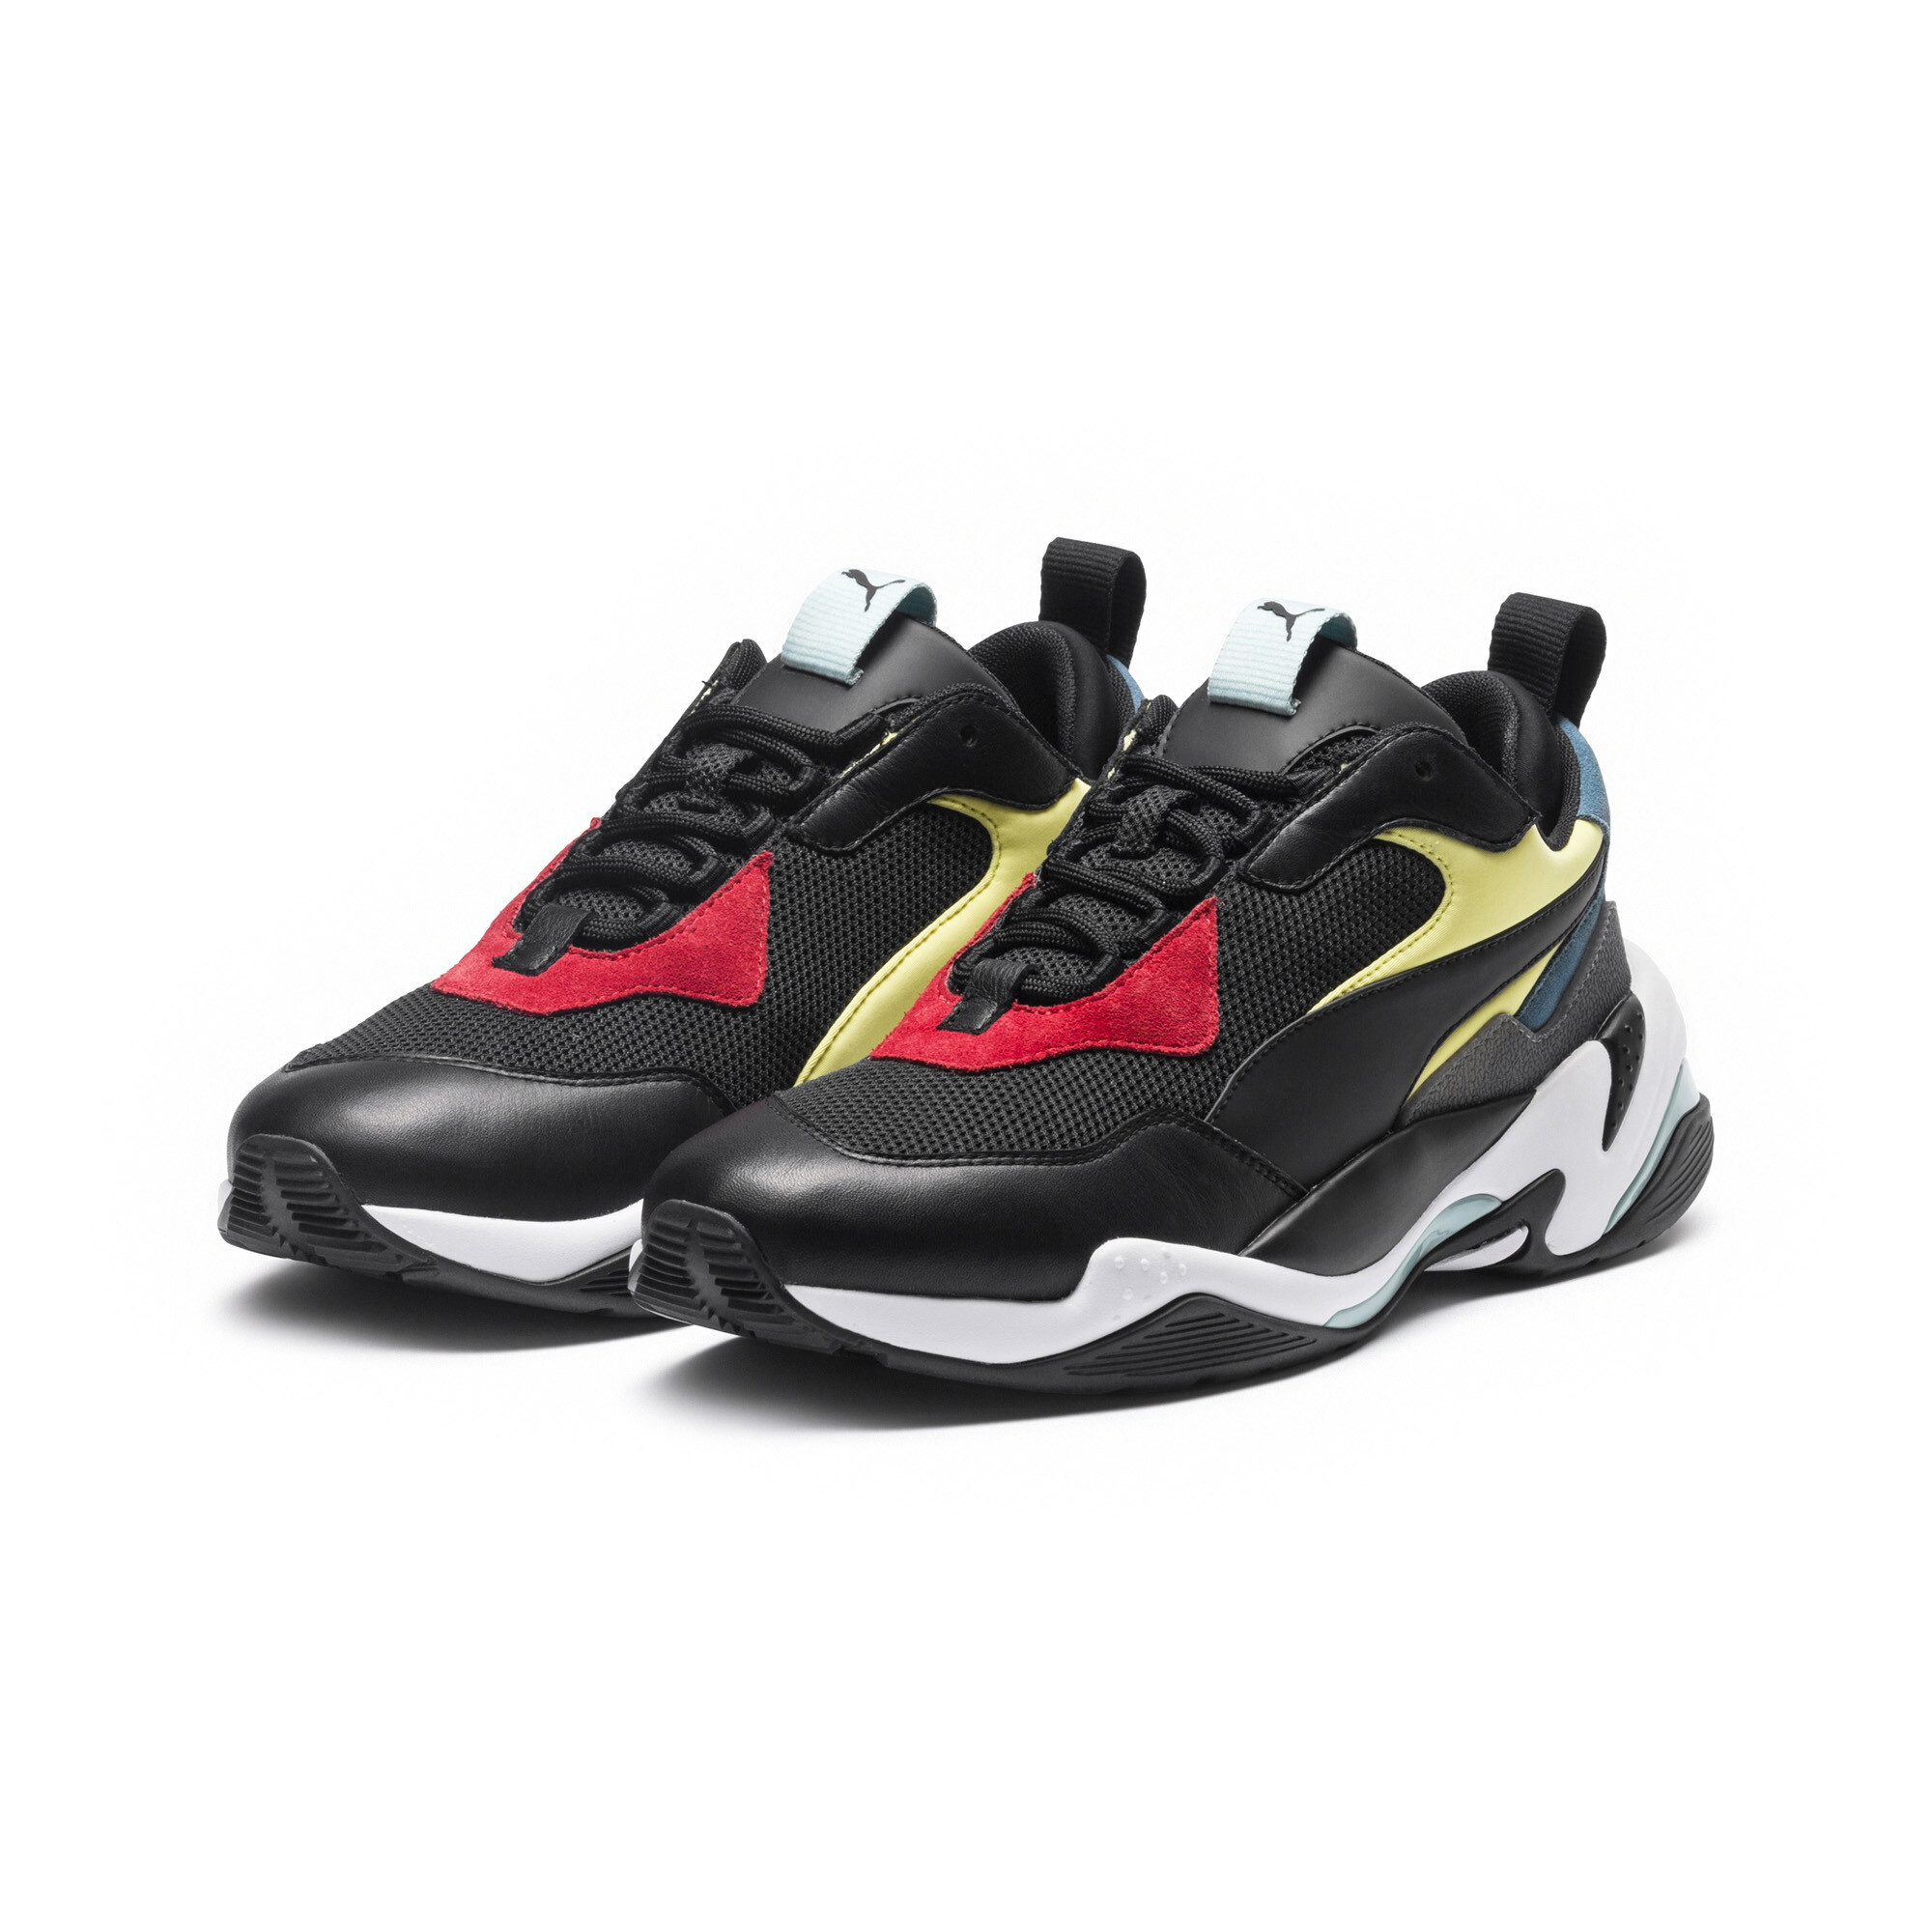 PUMA Thunder Spectra Sneakers Men Shoe | eBay